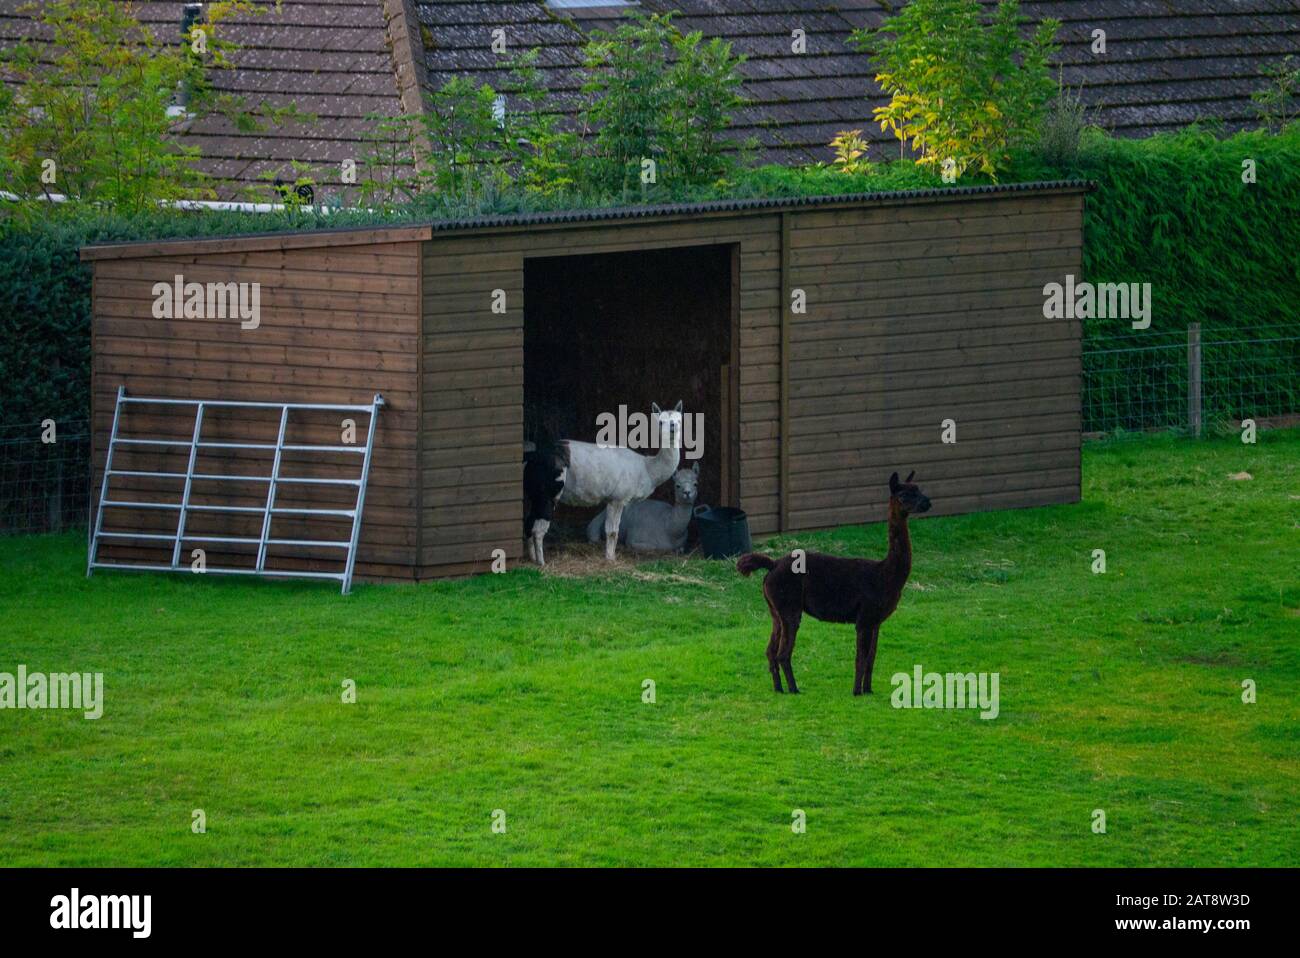 Llamas on a farm in the Scottish Highlands Inverness-shire Scotland UK Stock Photo